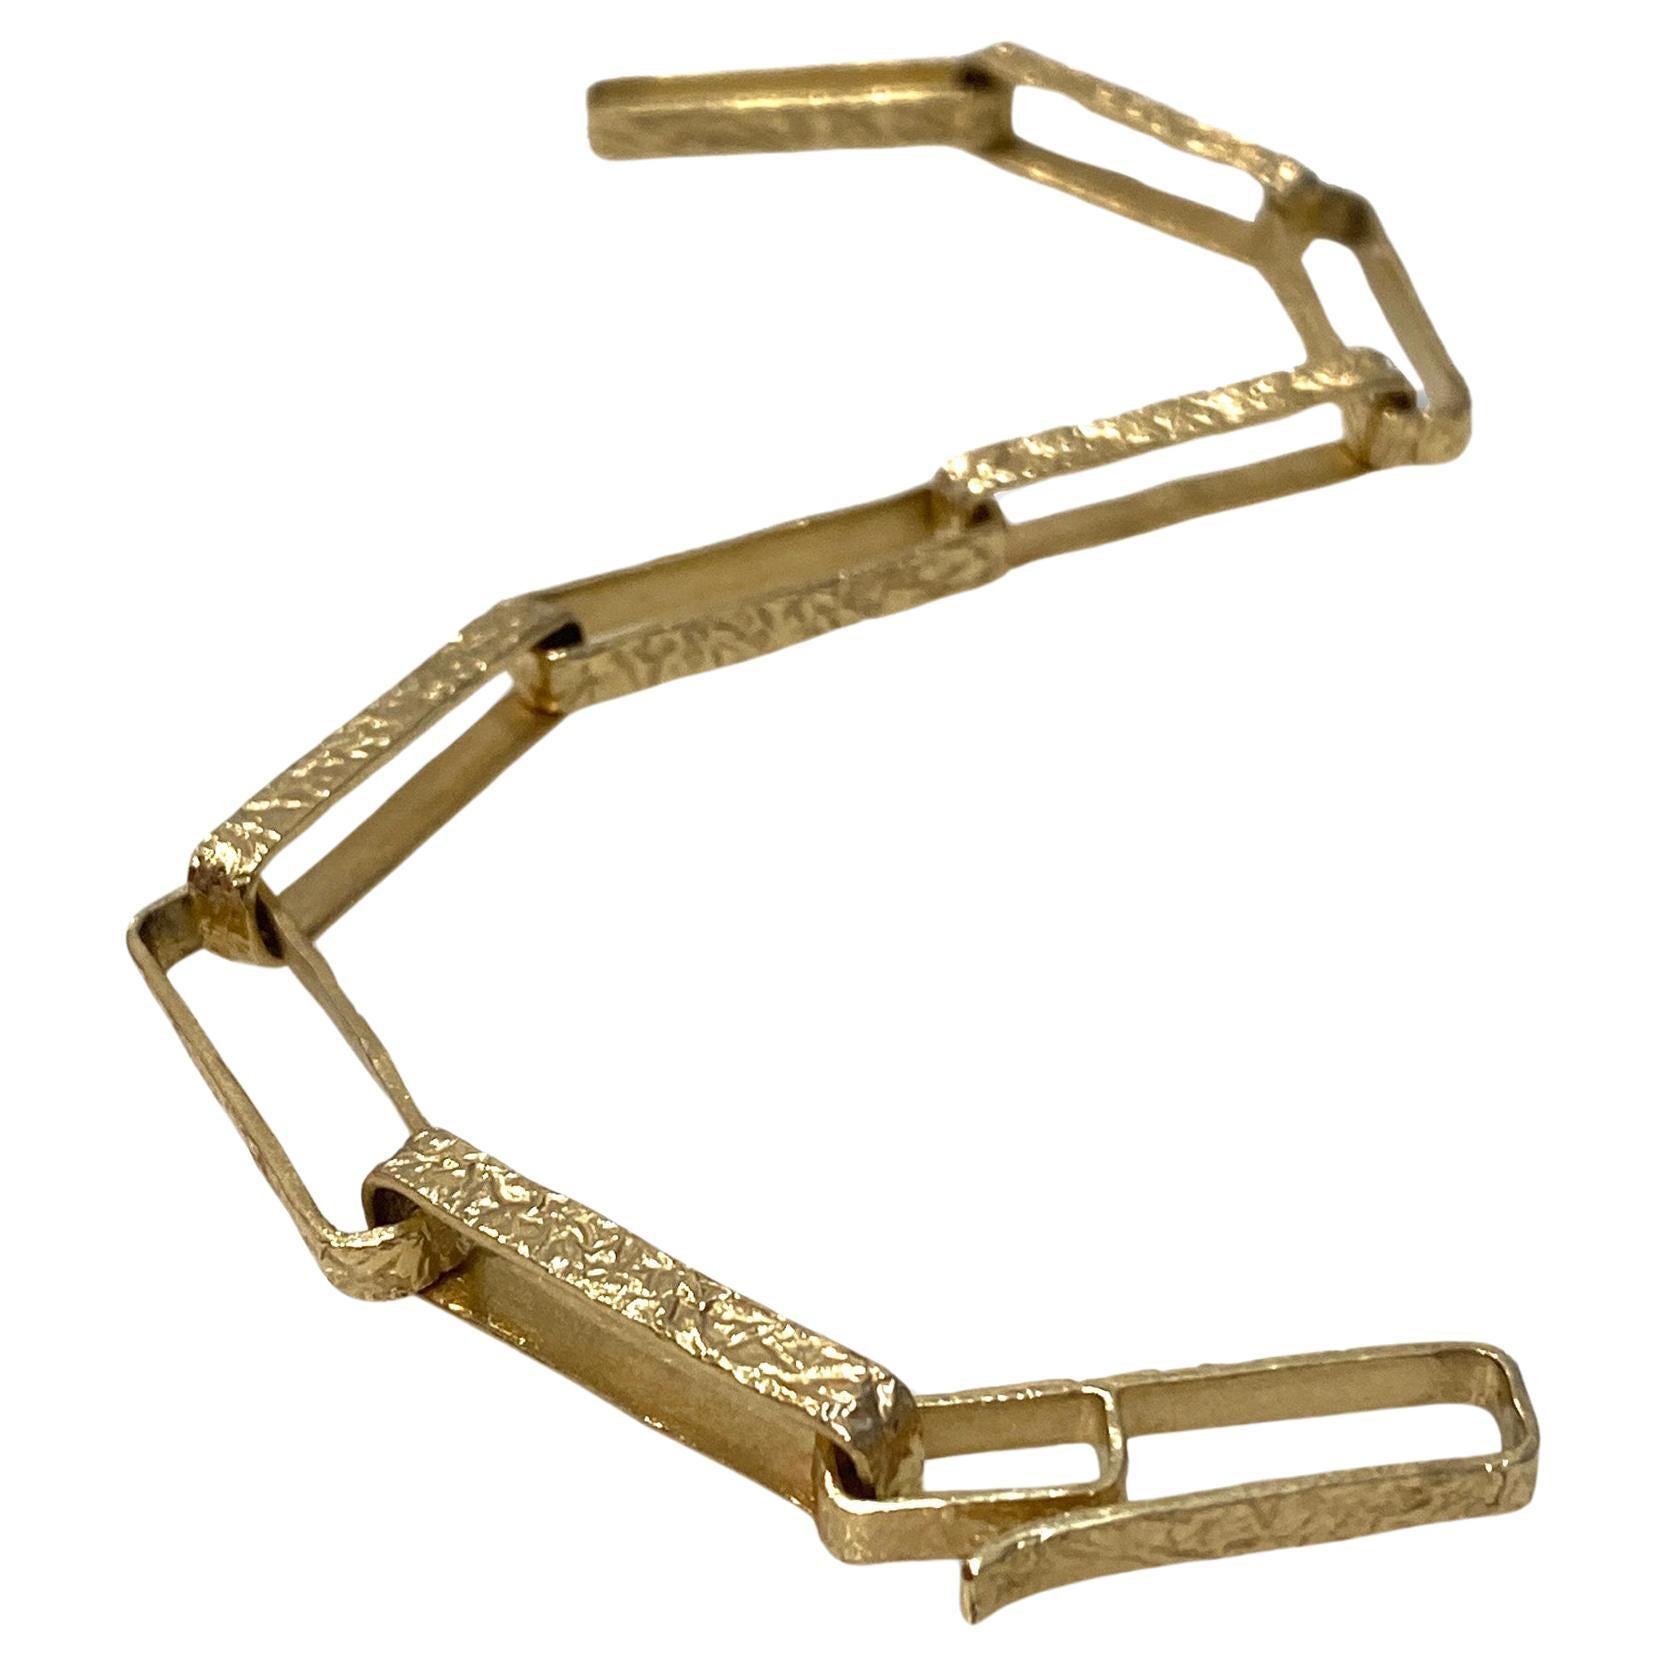  14 Karat Yelloe Gold Textured Large Link Bracelet by K.MITA  For Sale